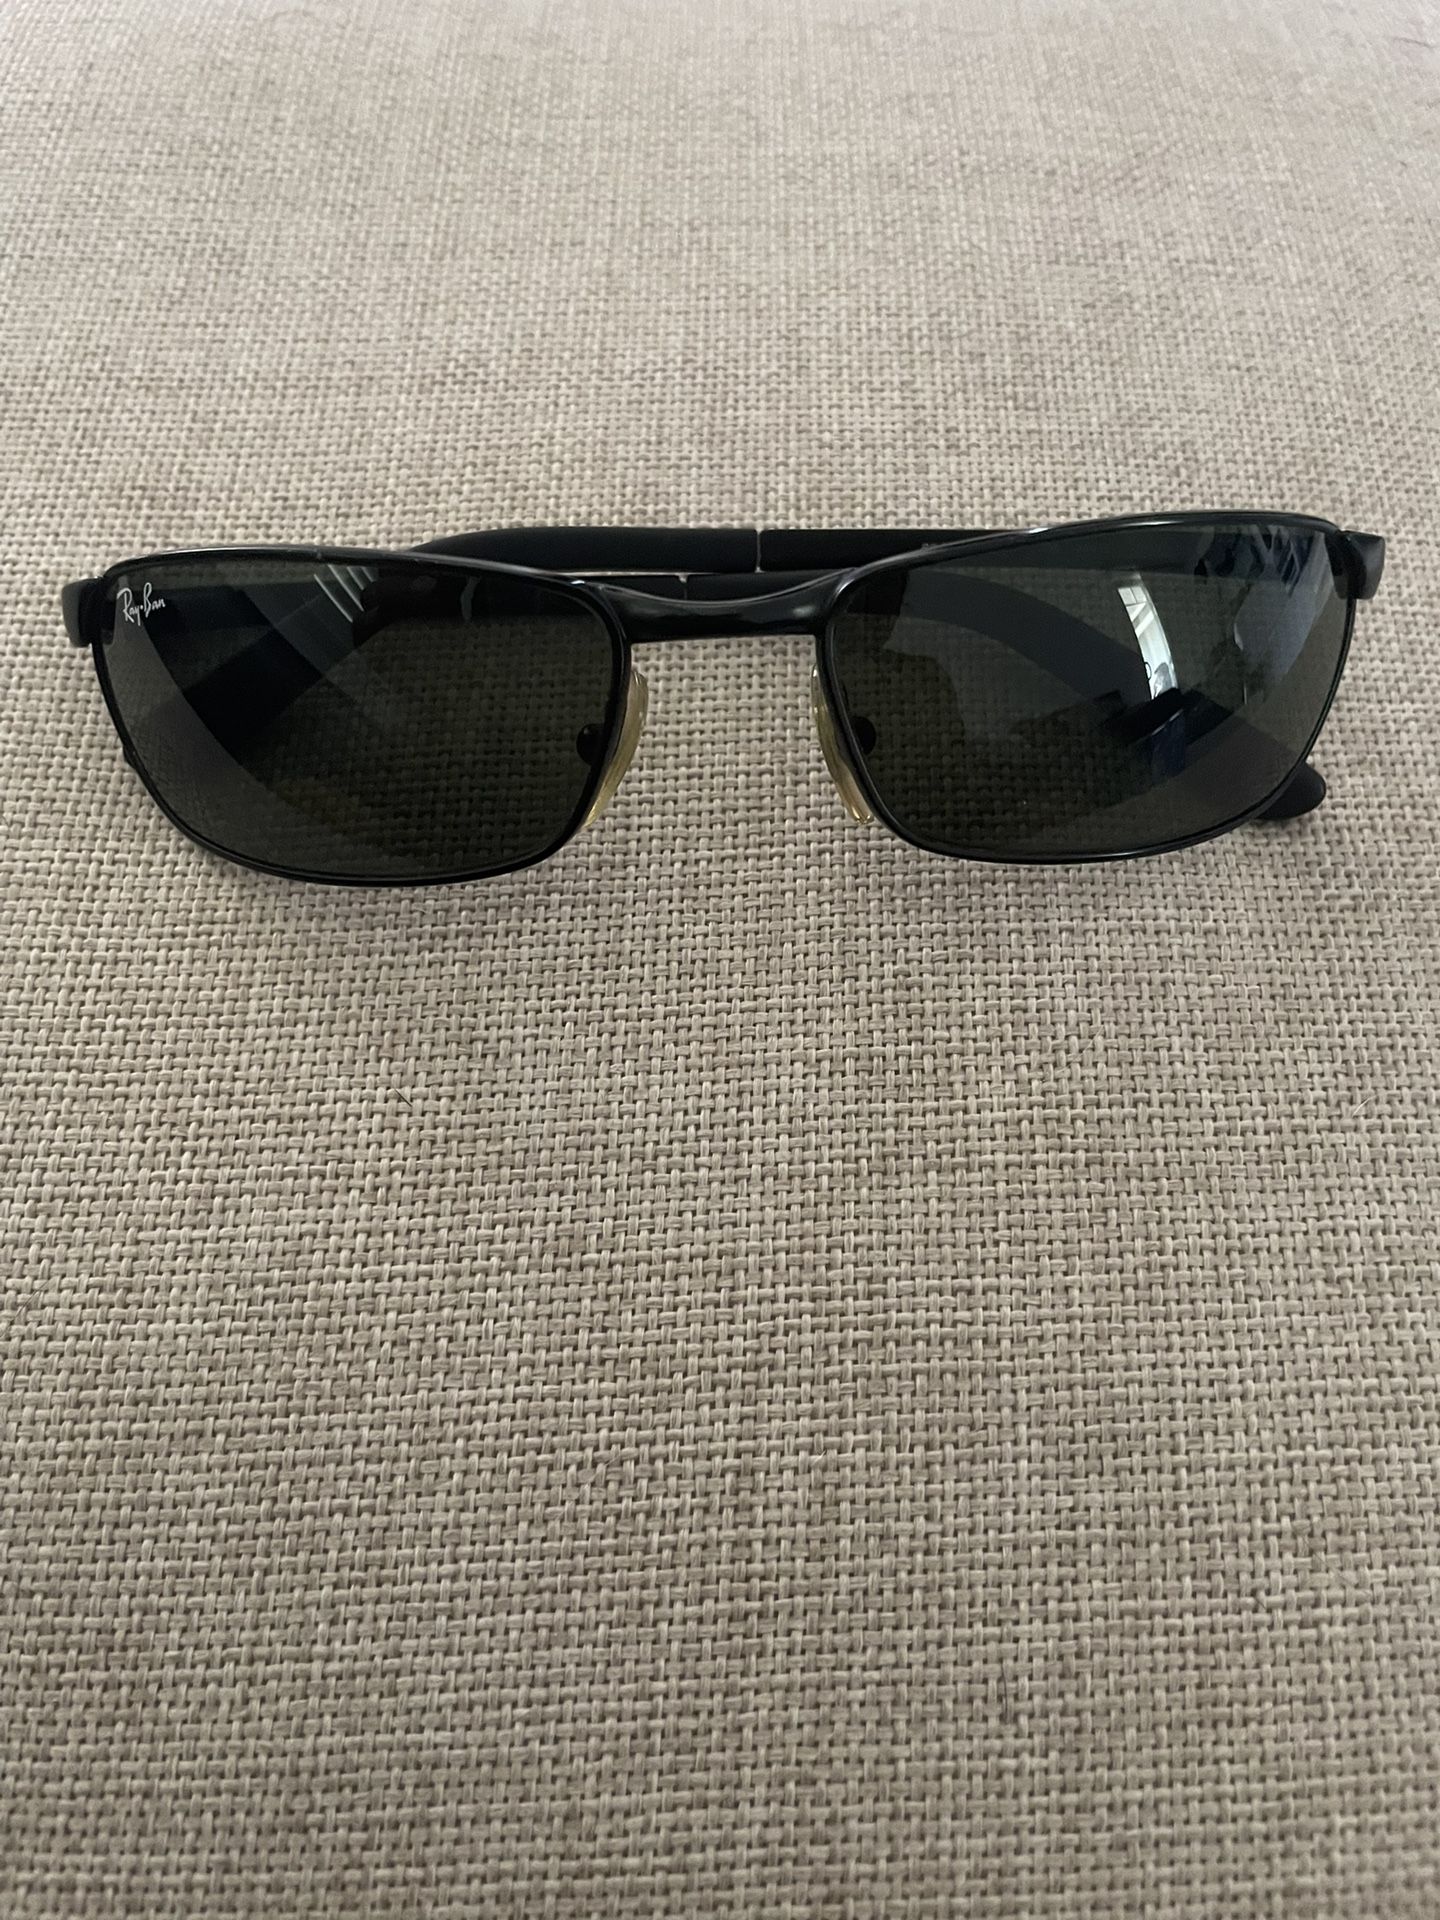 Rayban Men’s Sunglasses GUC